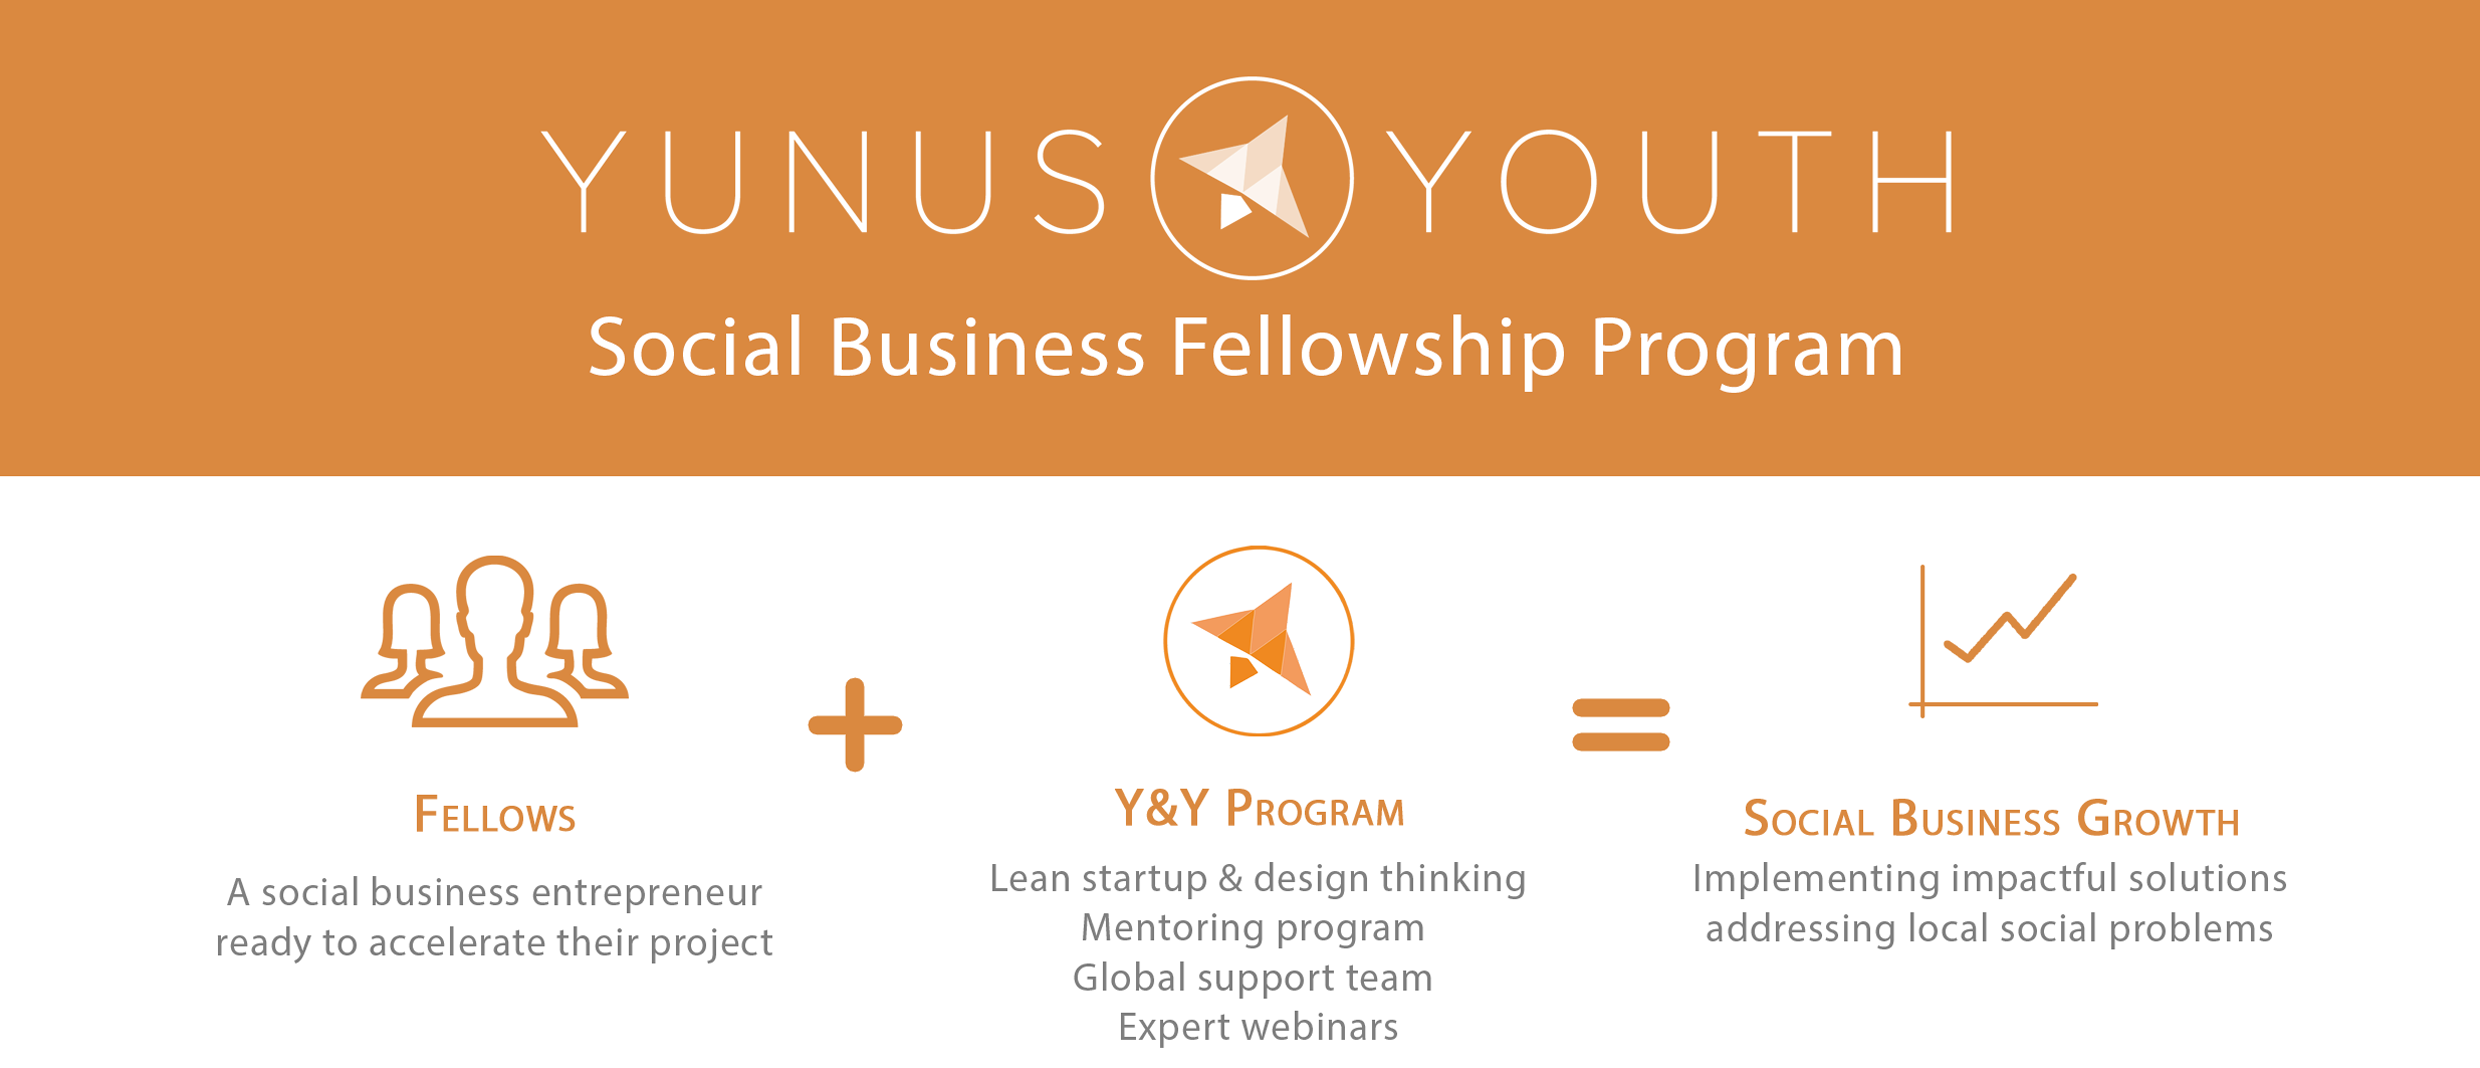 Yunus and Youth Global Fellowship Program for Social Business Entrepreneurs 2018